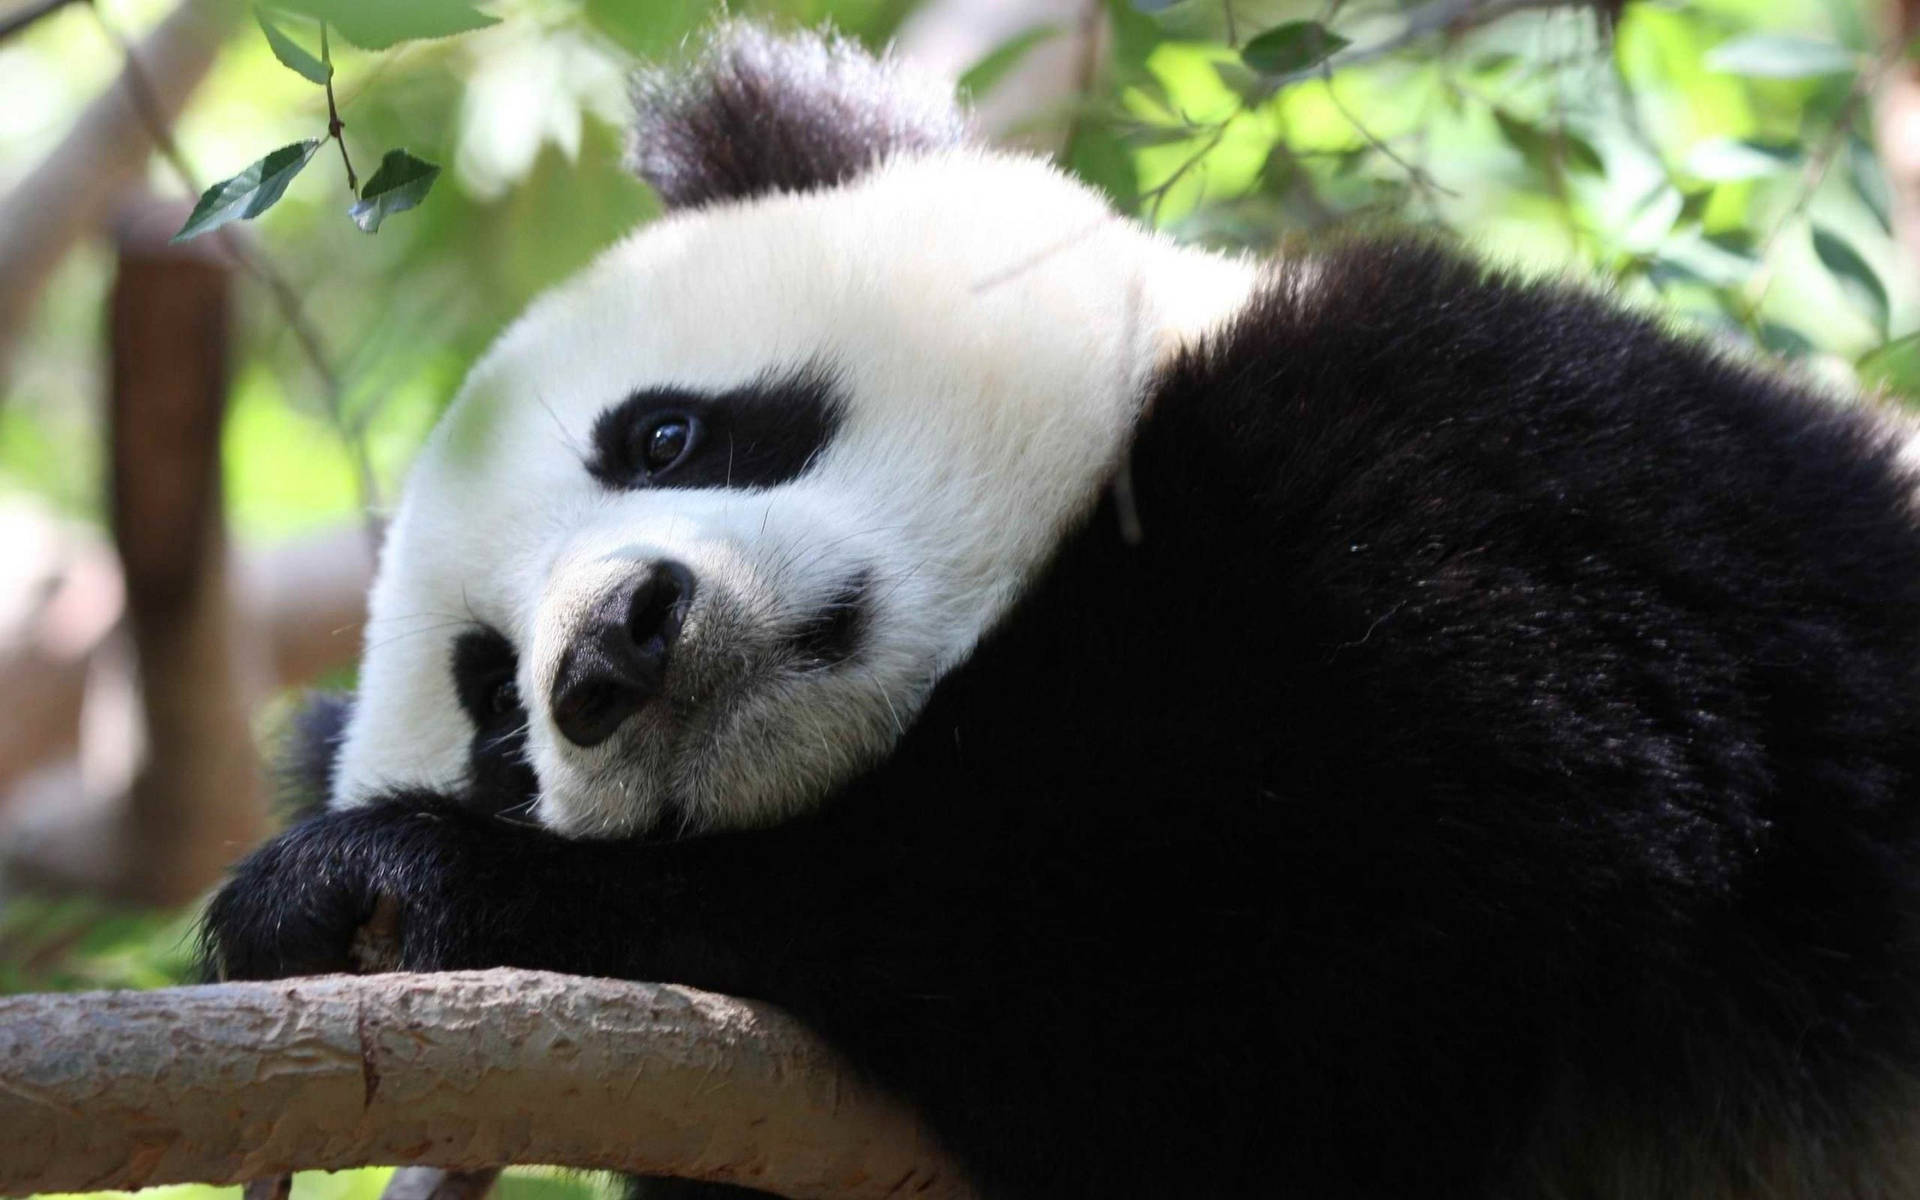 Sad Aesthetic Panda At Tree Branch Wallpaper